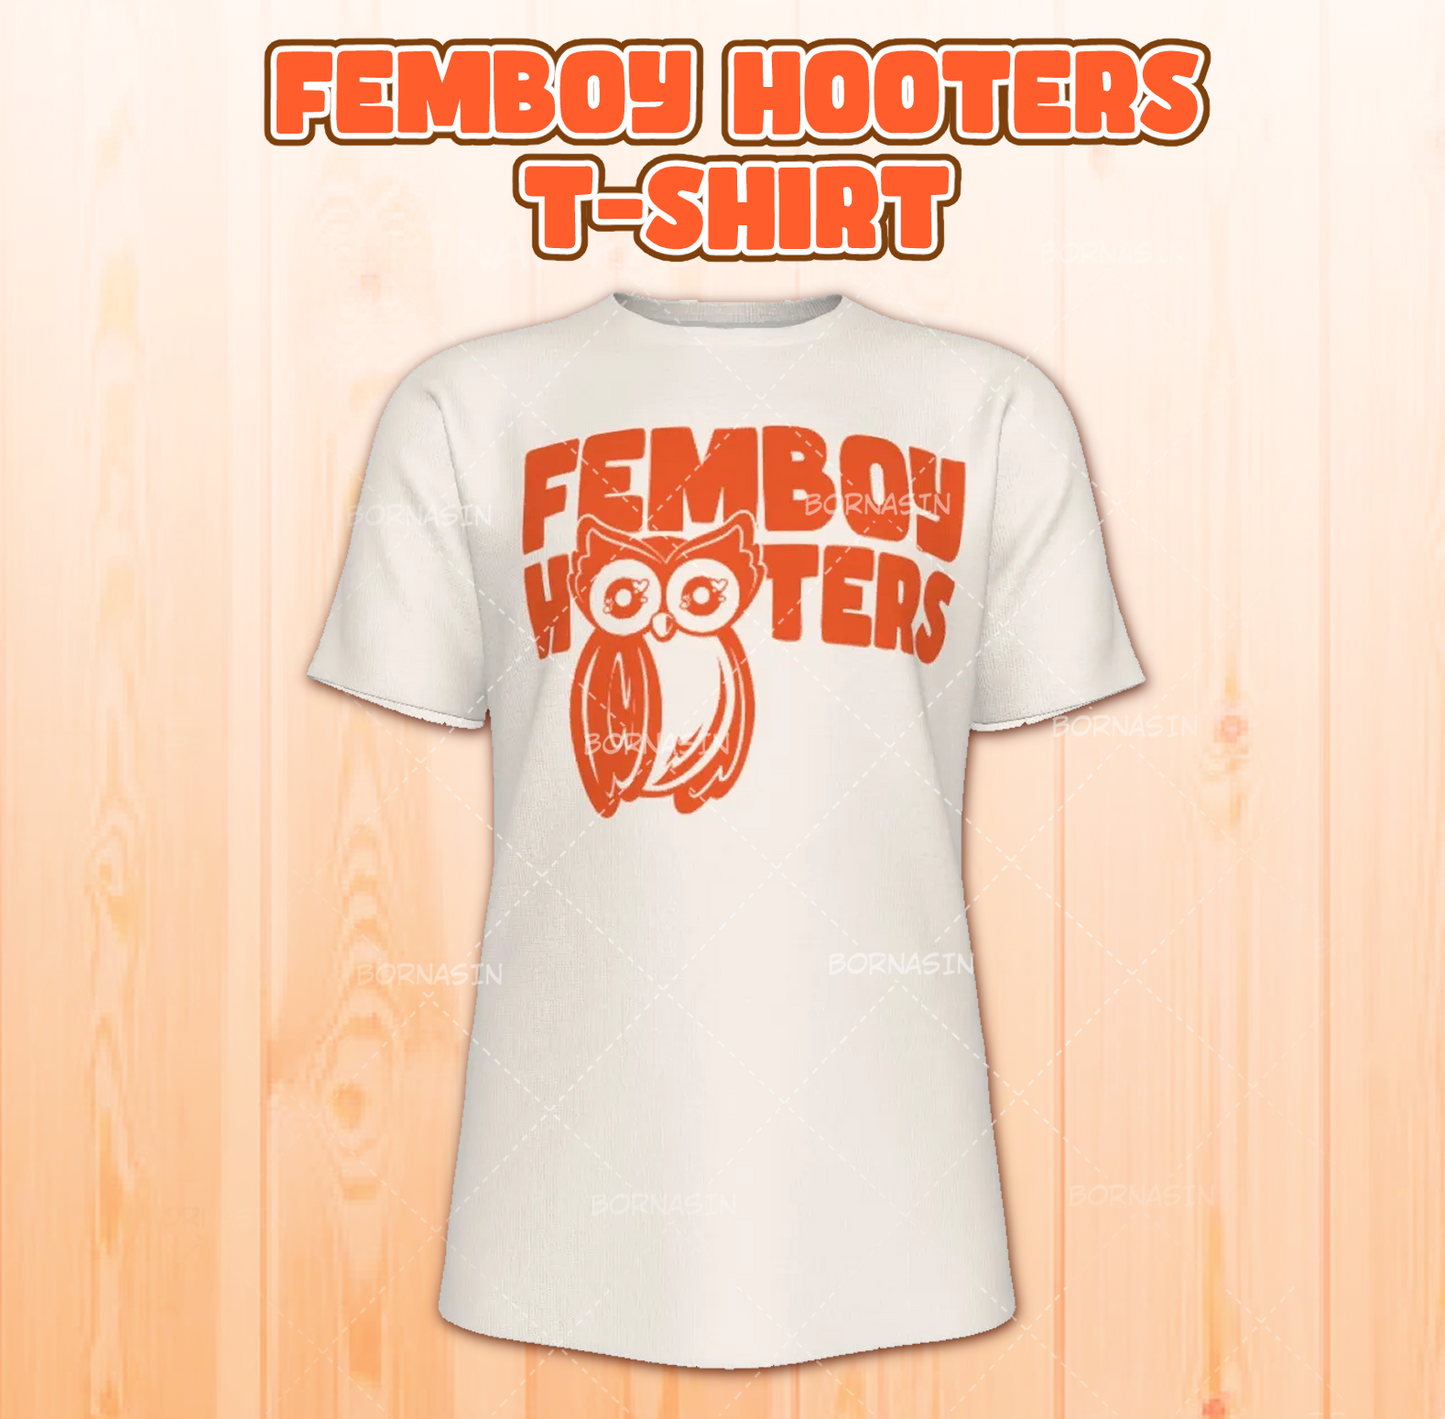 Femboy Hooters